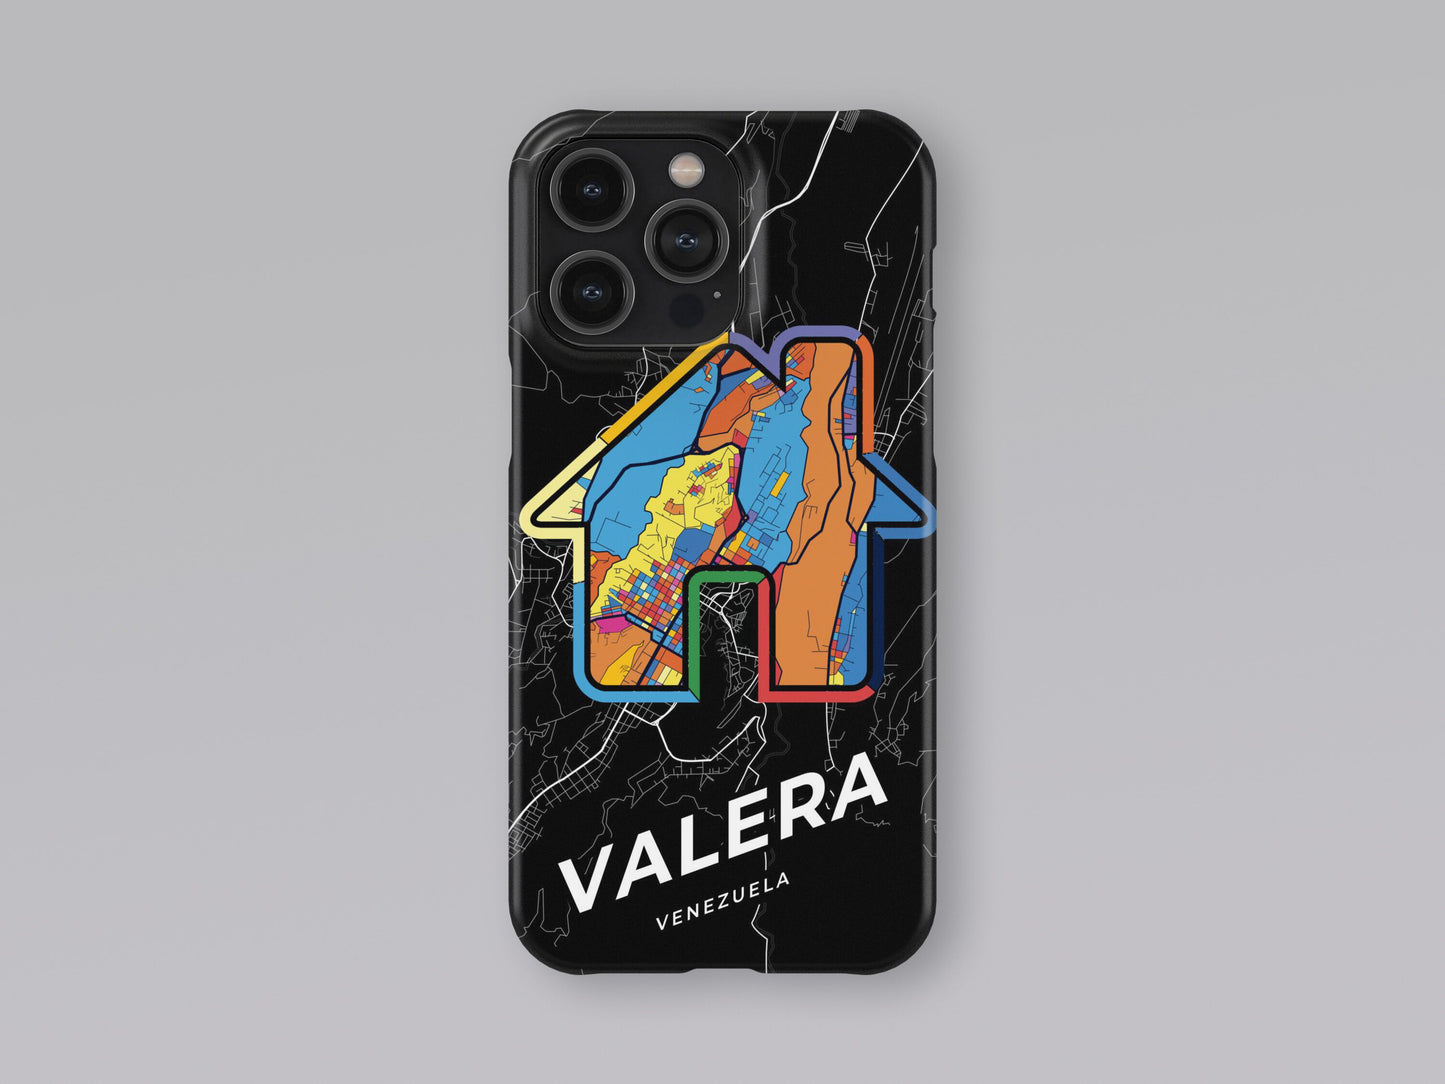 Valera Venezuela slim phone case with colorful icon. Birthday, wedding or housewarming gift. Couple match cases. 3